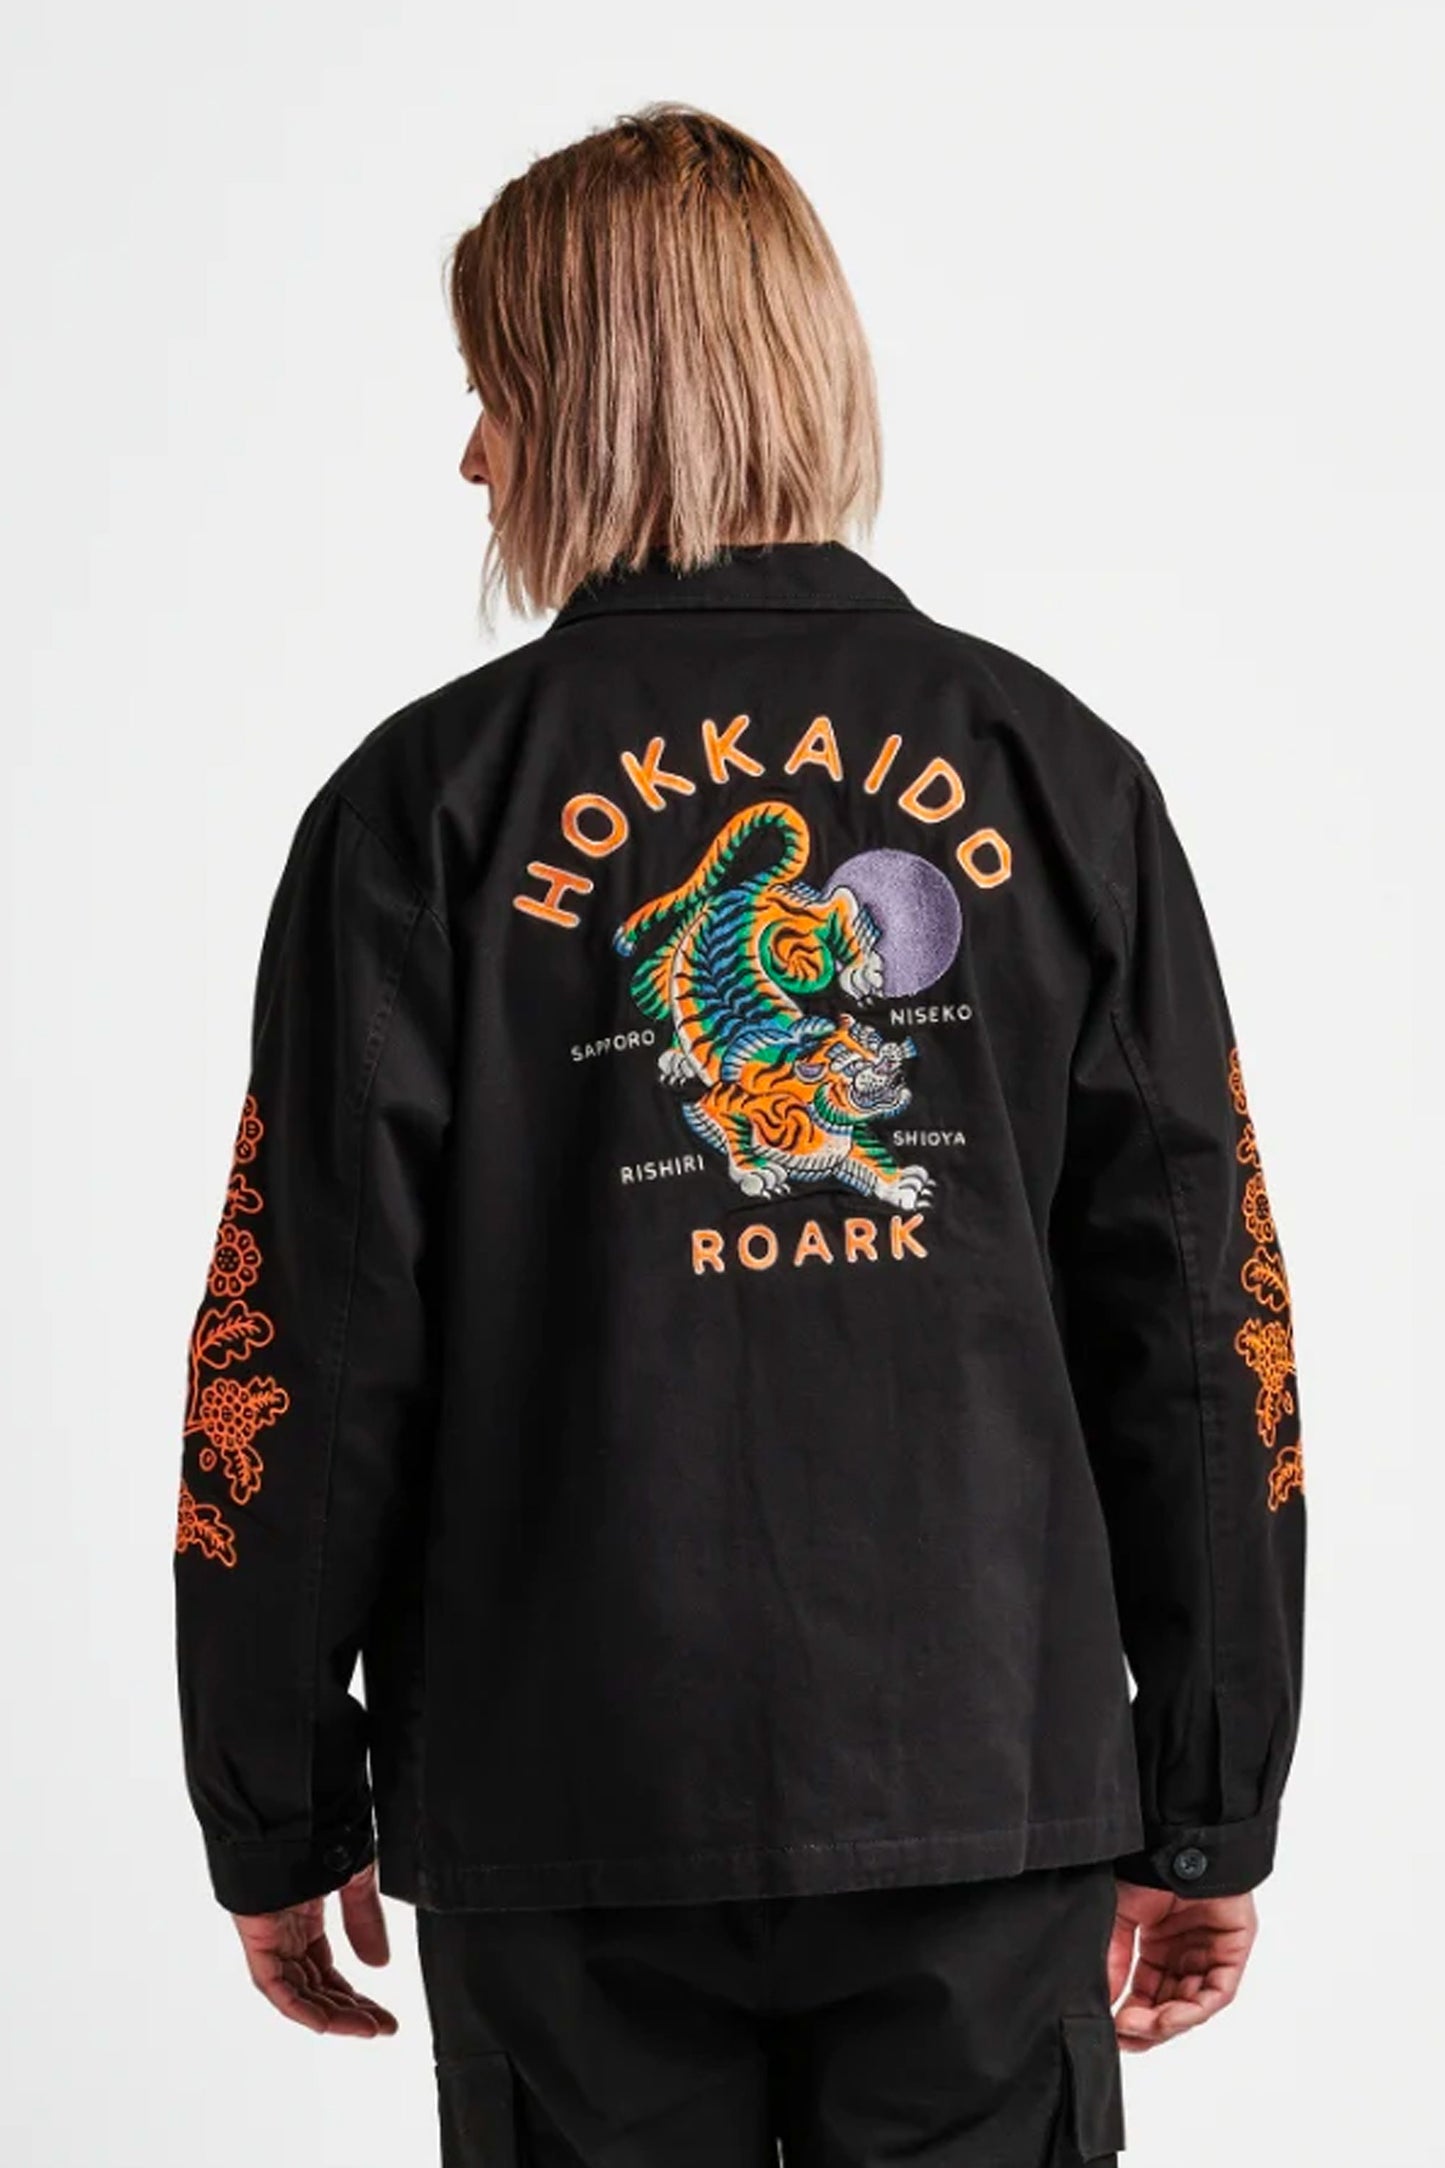 Pukas-Surf-Shop-Roark-Jacket-hokkaido-garage-jacket